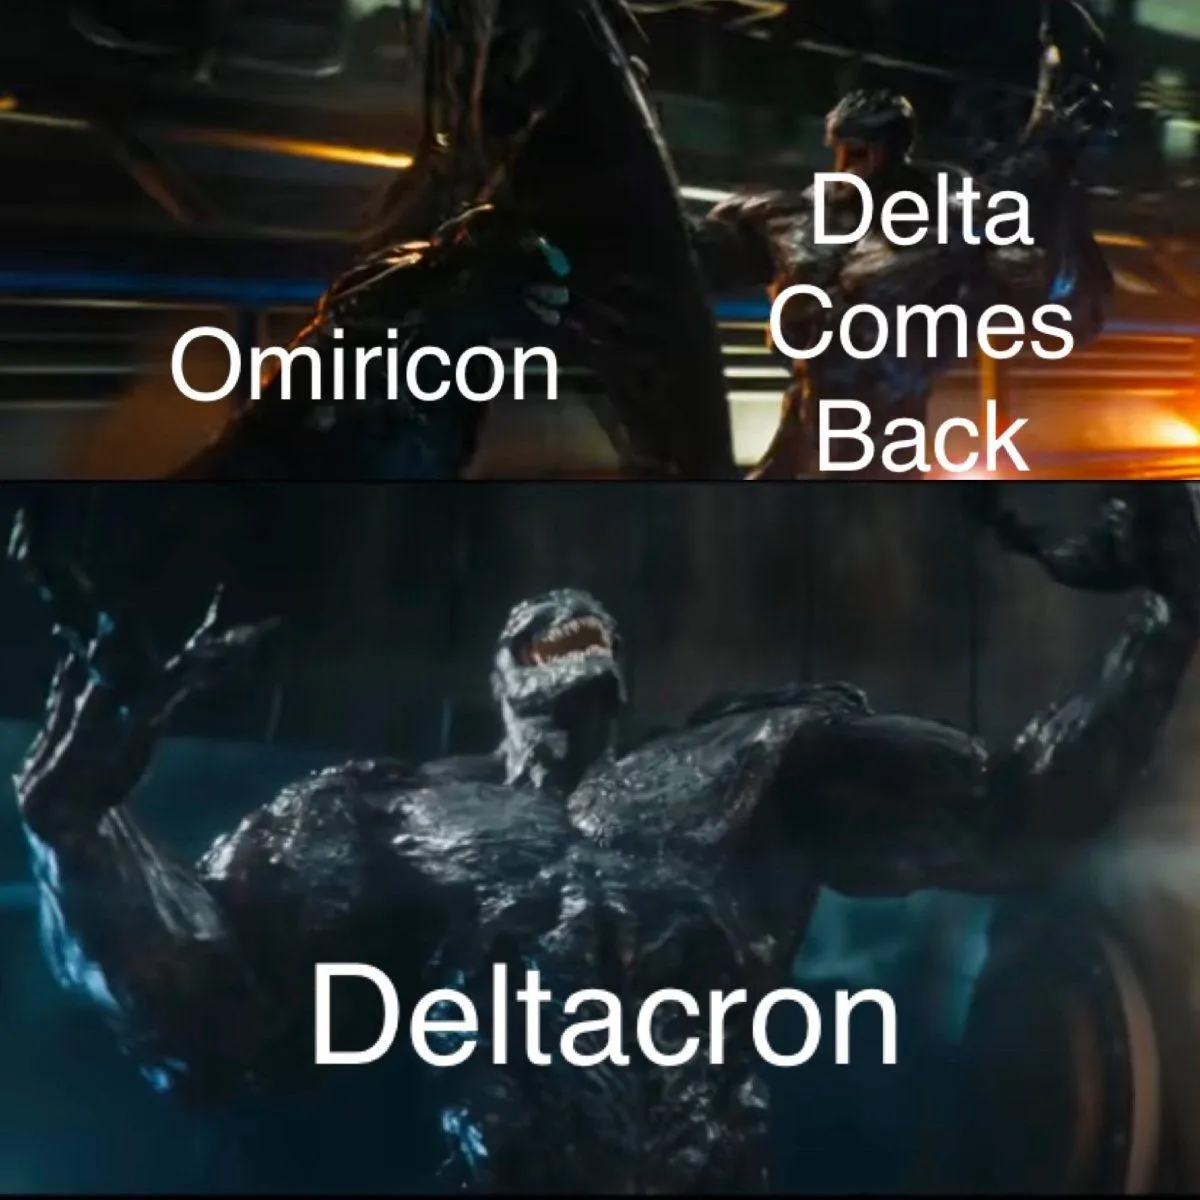 Hillarious Meme fest on Deltacron Variant joining Forces